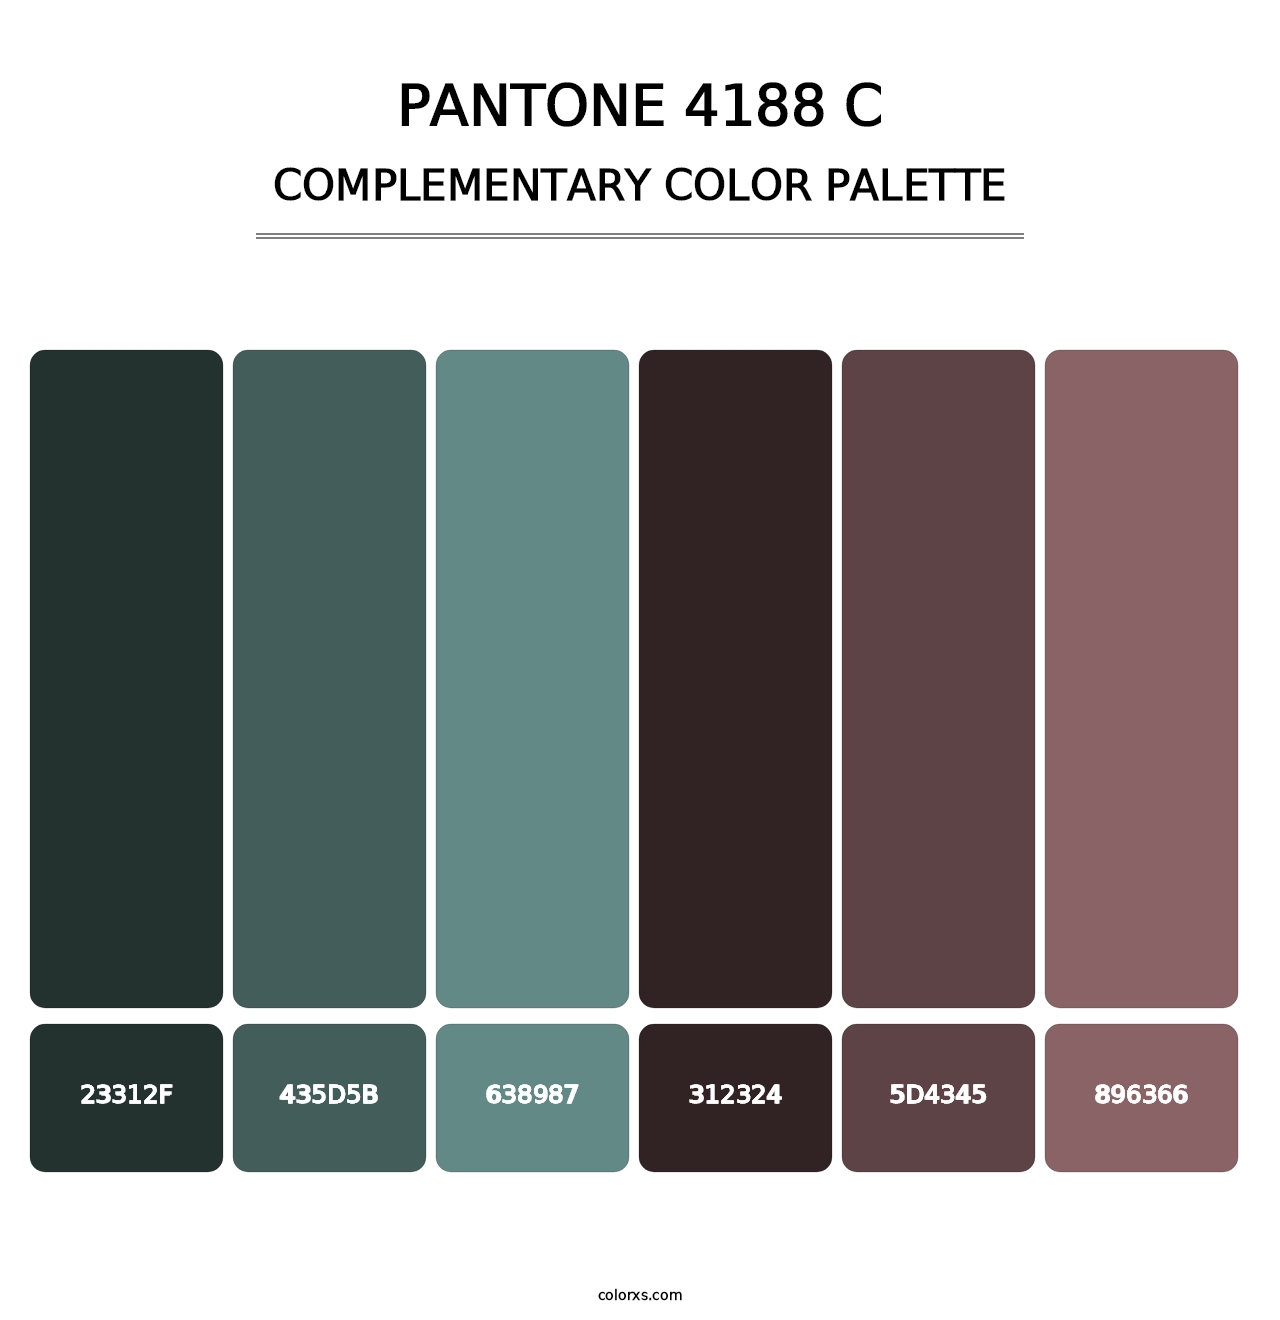 PANTONE 4188 C - Complementary Color Palette